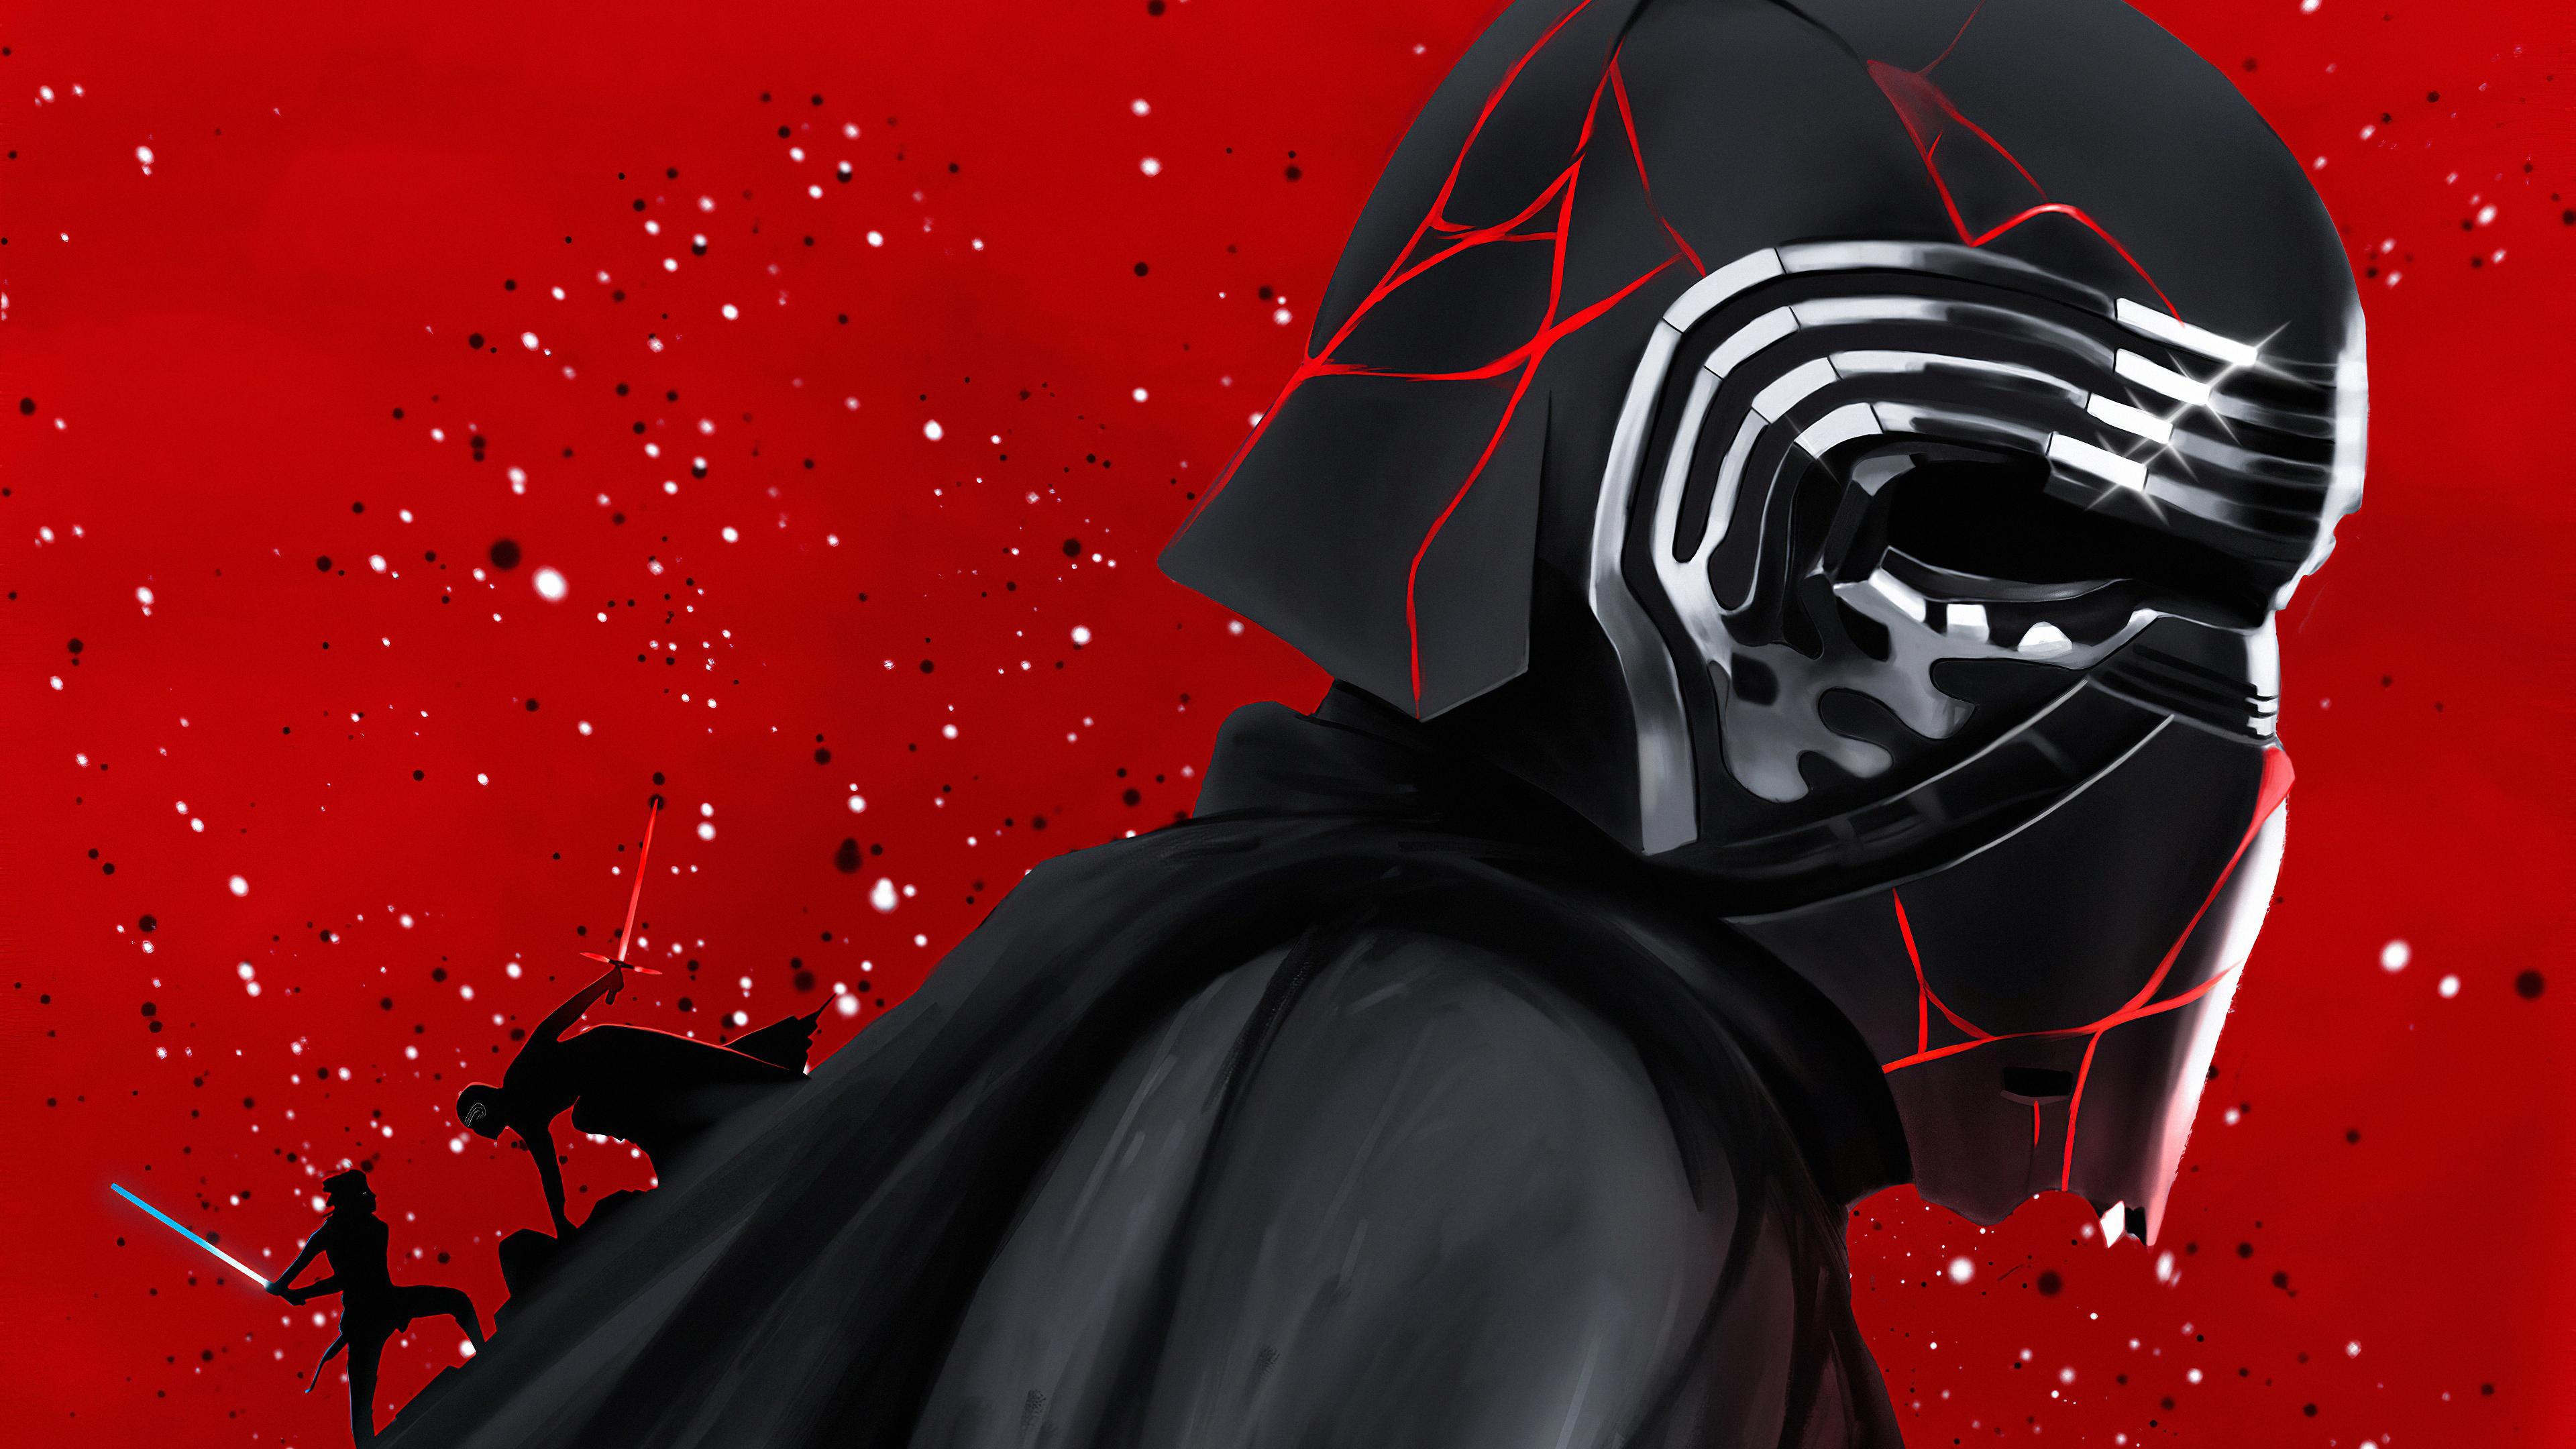 Star Wars The Rise Of Skywalker Poster Art, HD Movies, 4k